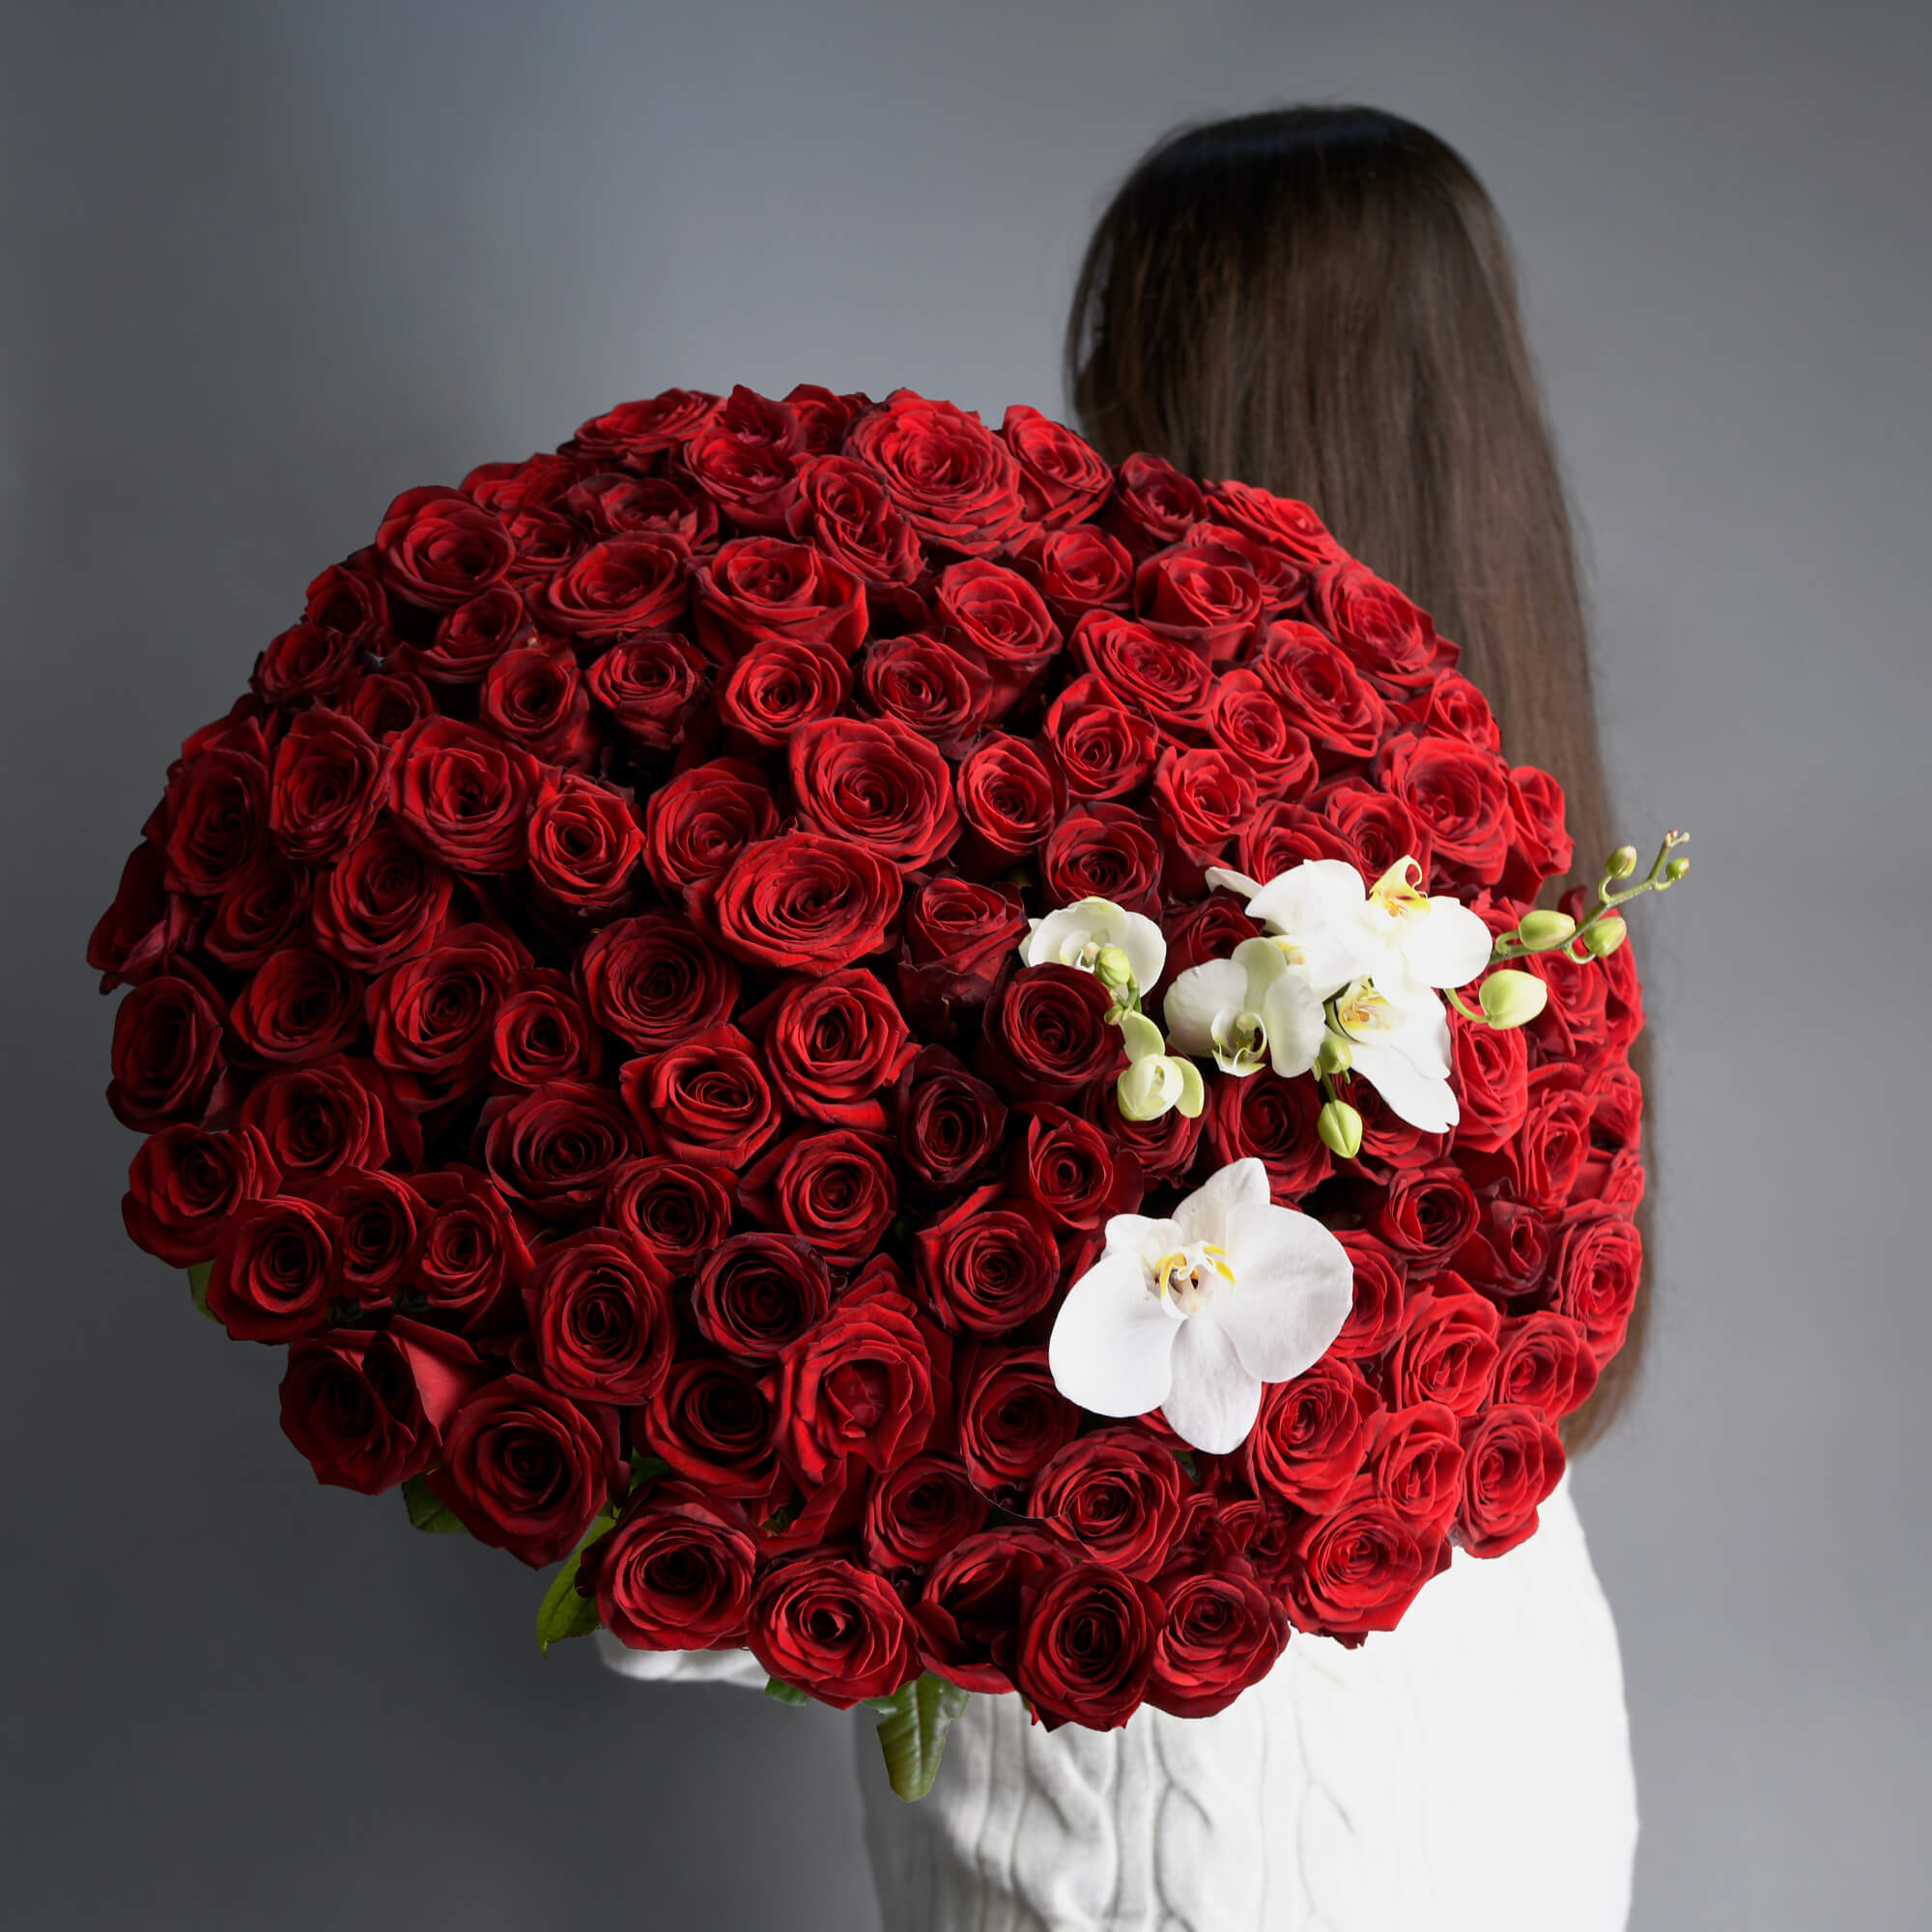 Buchet cu 101 trandafiri rosii si phalaenopsis